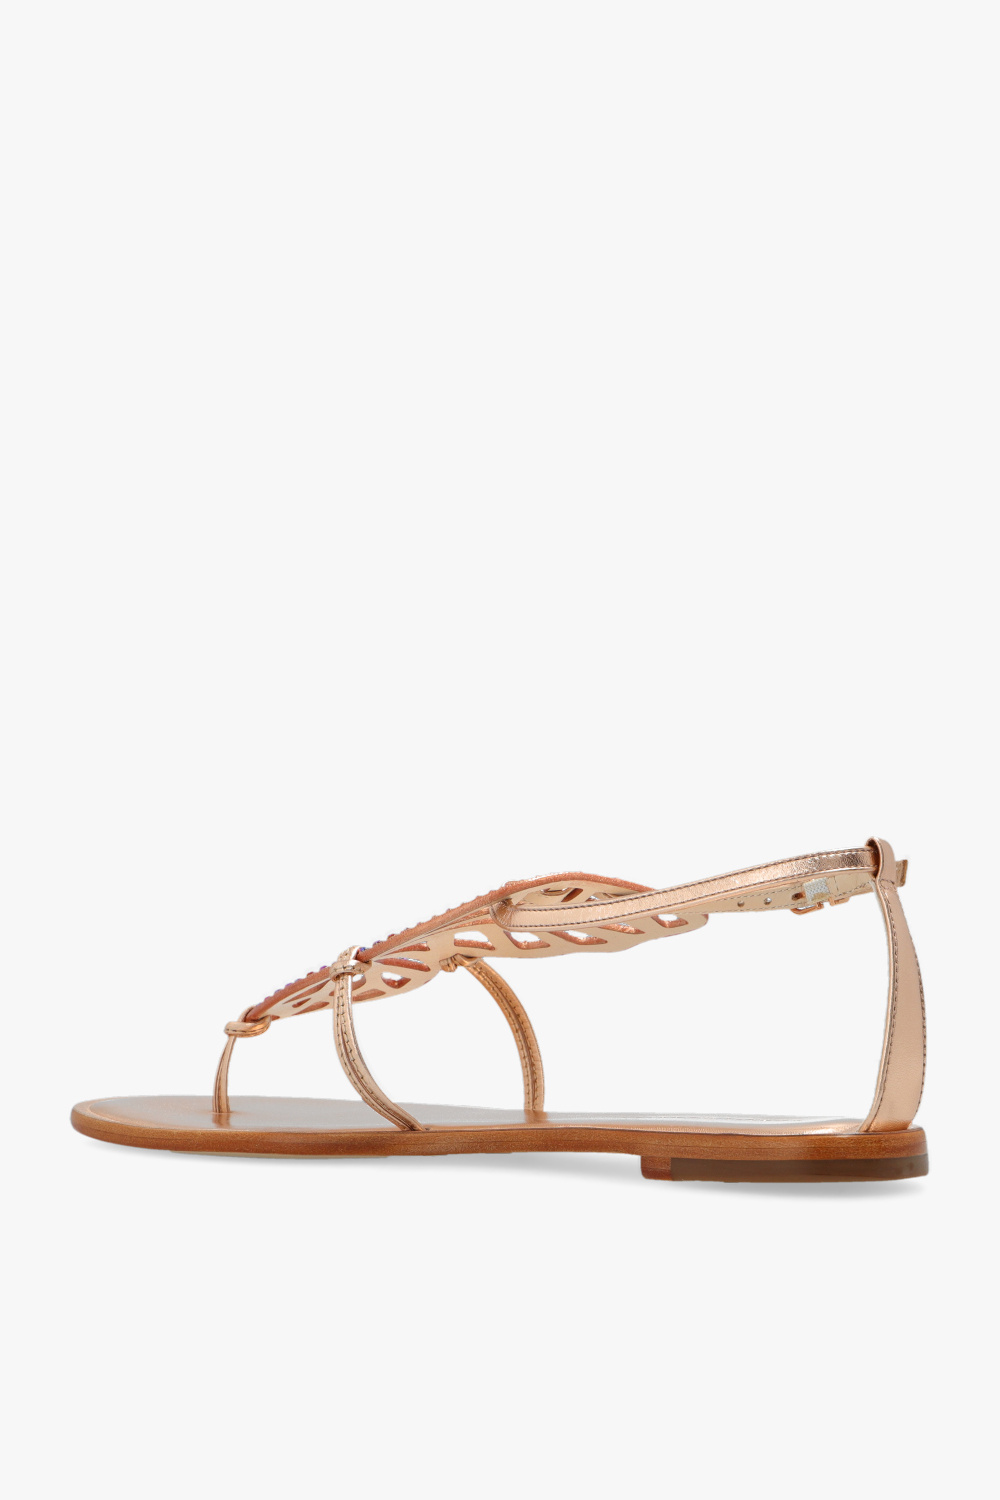 Sophia Webster ‘Butterfly’ heeled sandals